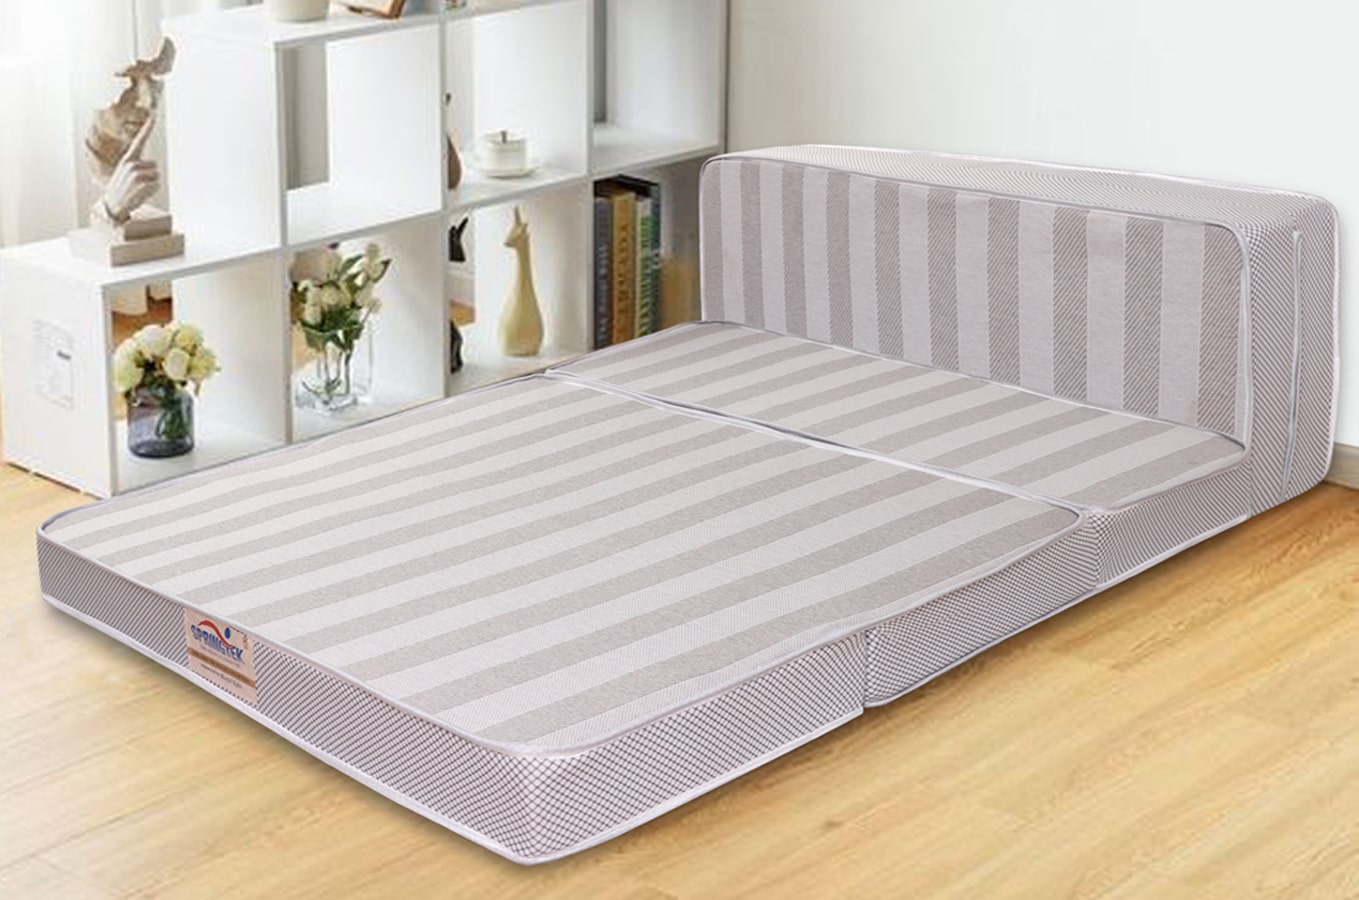 foldable mattress full size costco